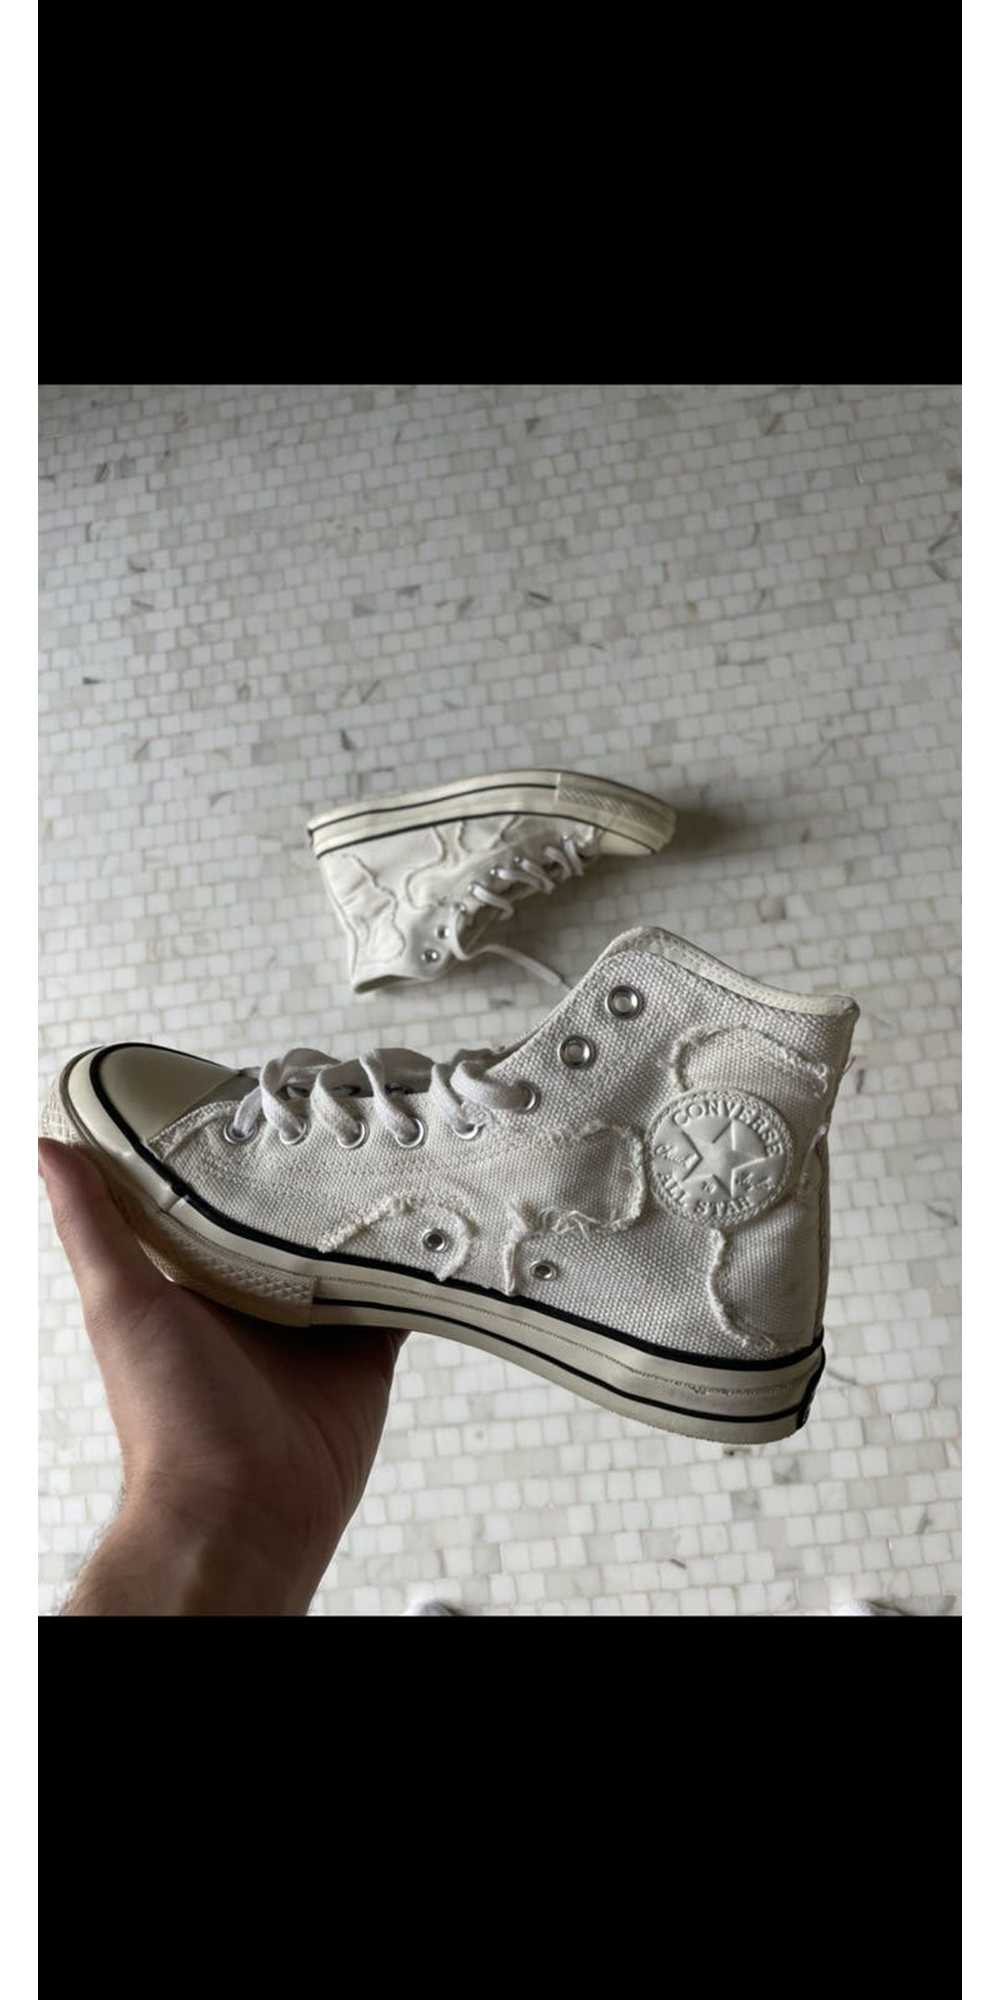 Converse Converse Sneakers - image 2